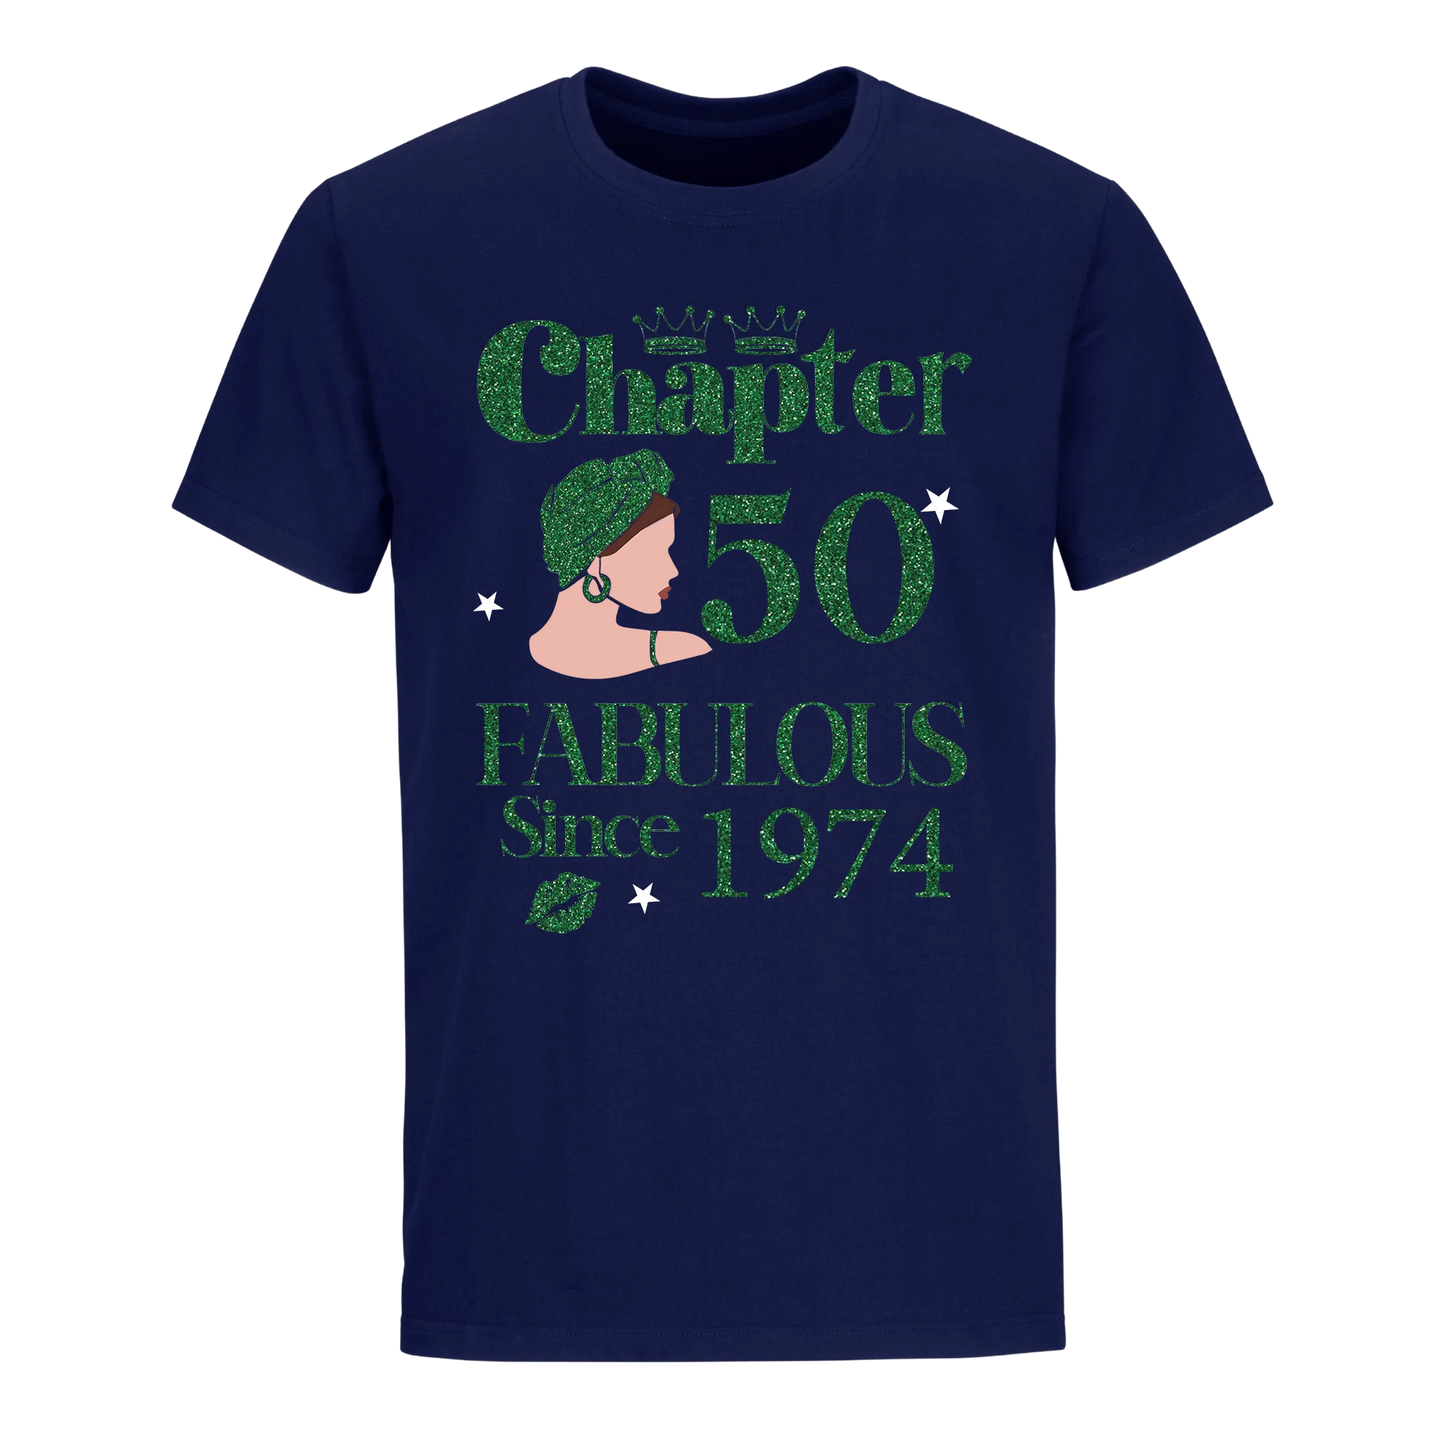 CHAPTER 50TH FABULOUS SINCE 1974 GREEN UNISEX SHIRT